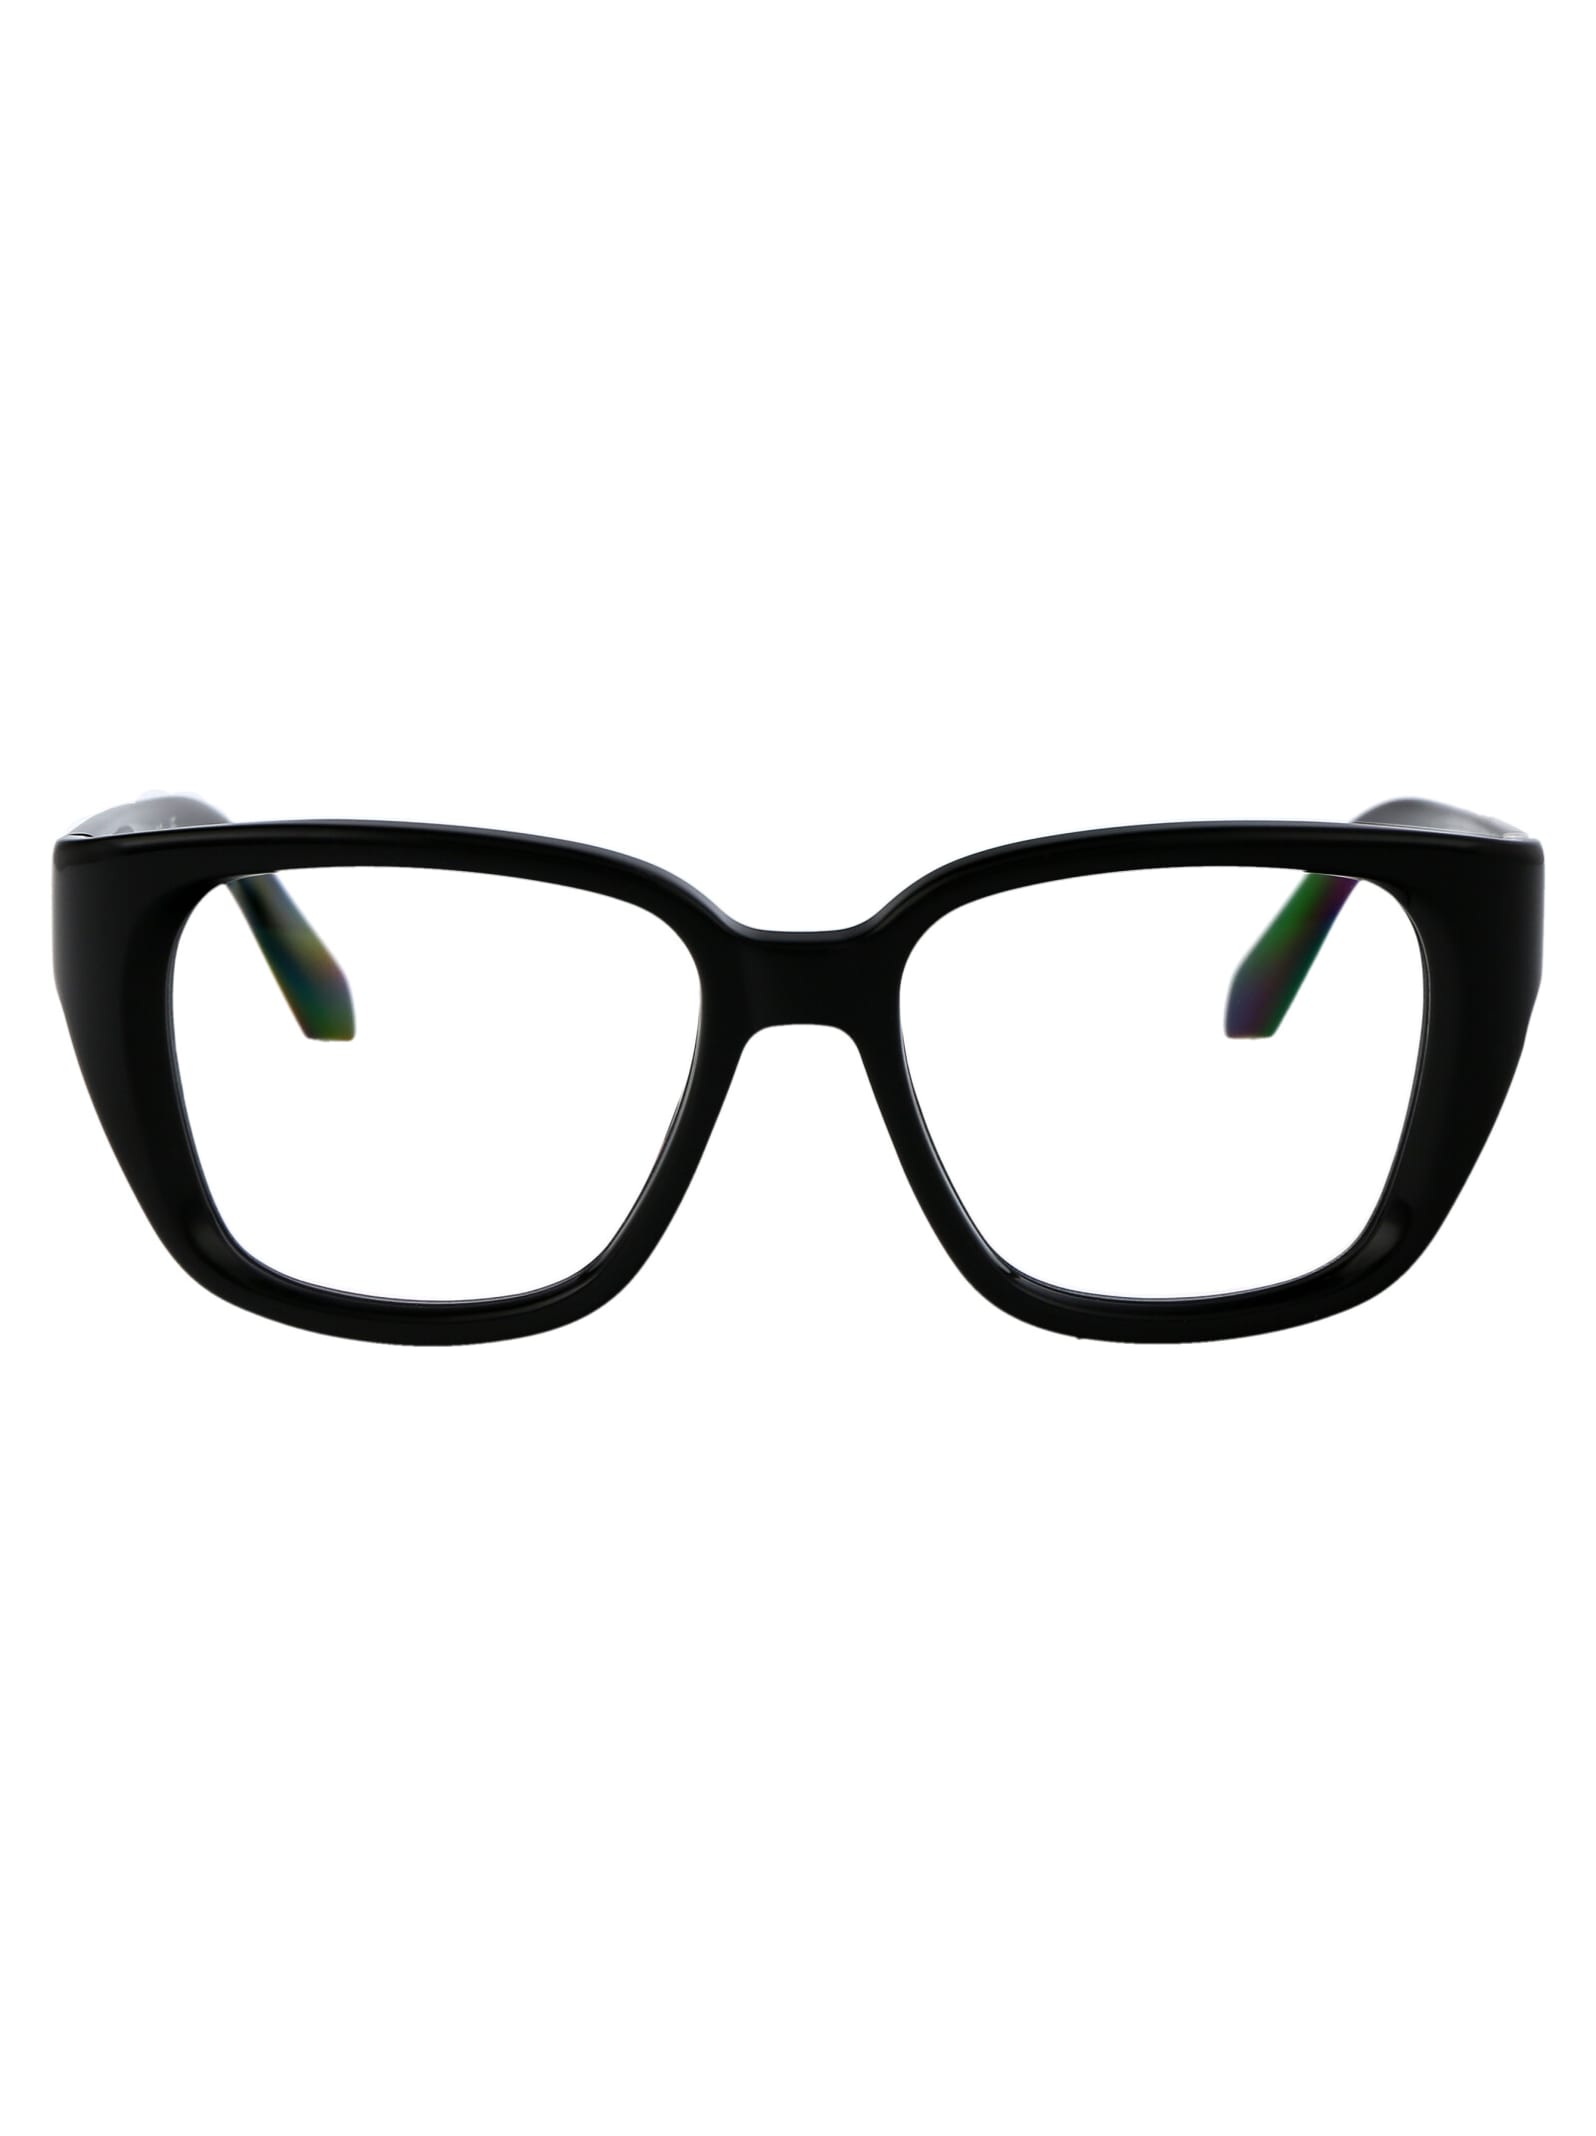 Optical Style 63 Glasses